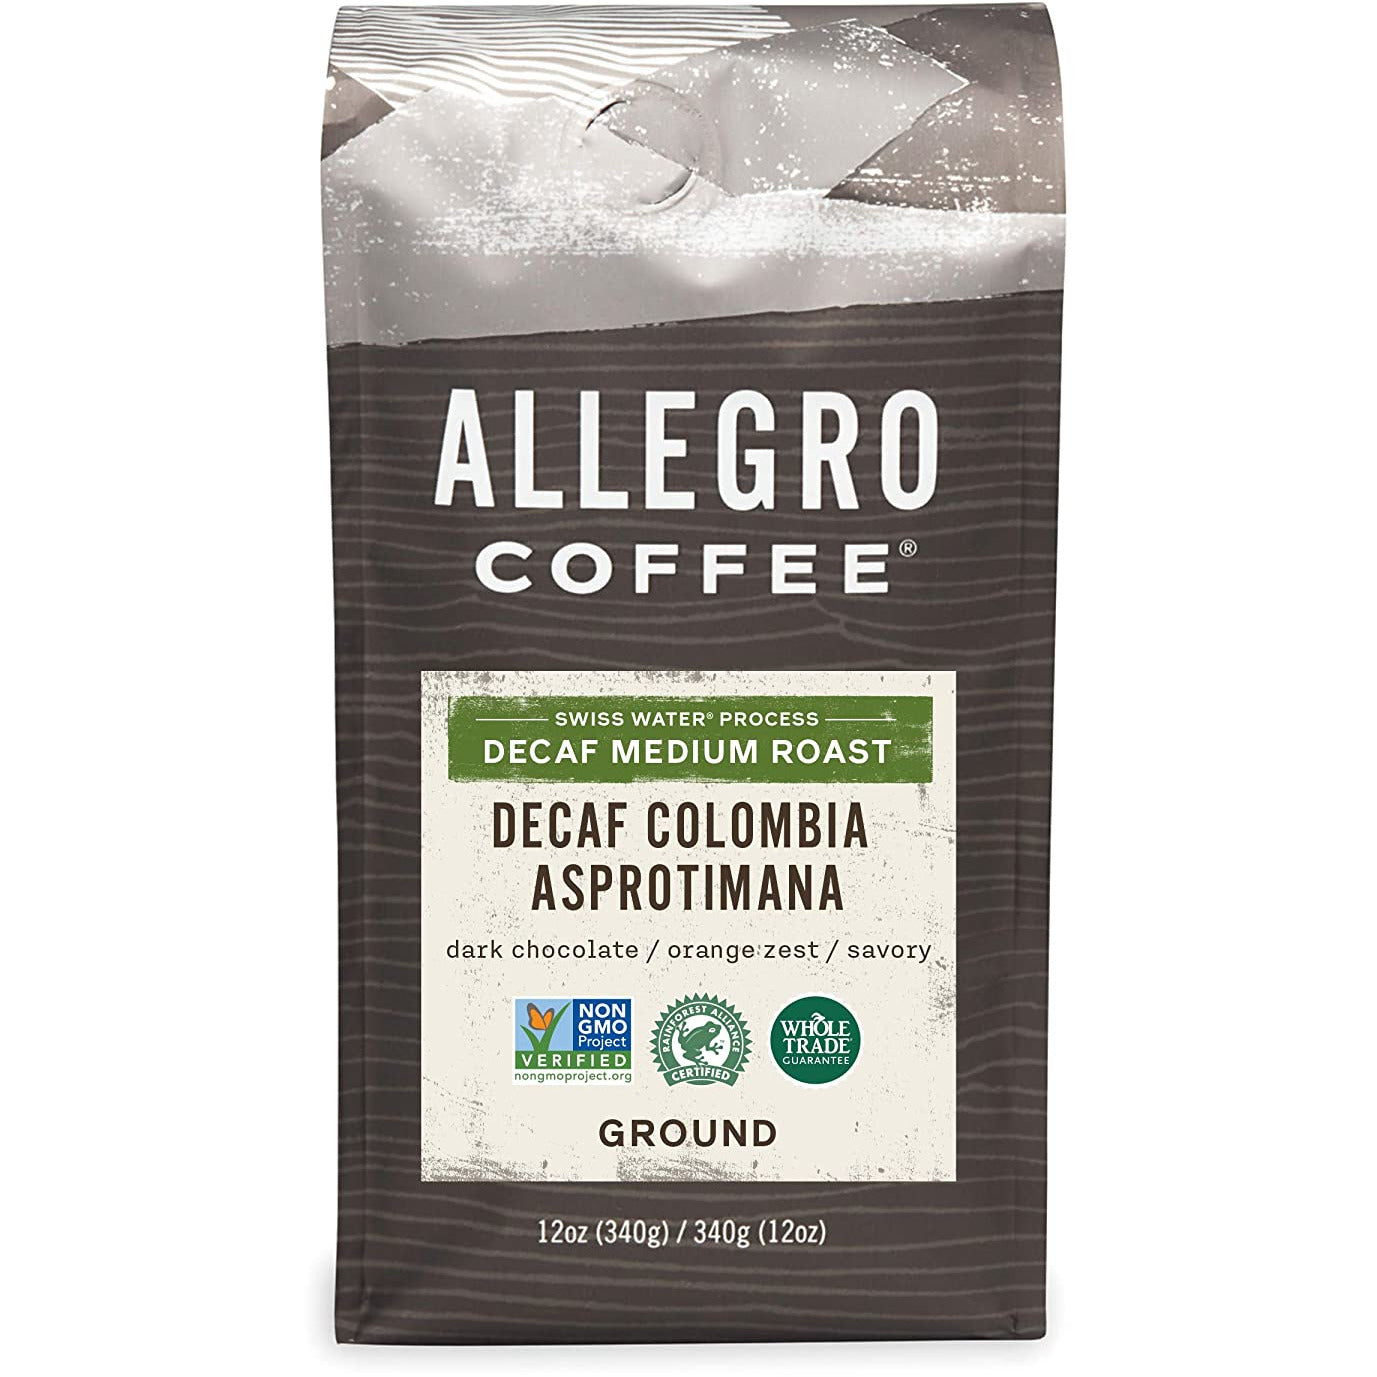 Oasis Fresh Allegro Coffee Decaf Colombia Light Roast, Ground, 12 oz.